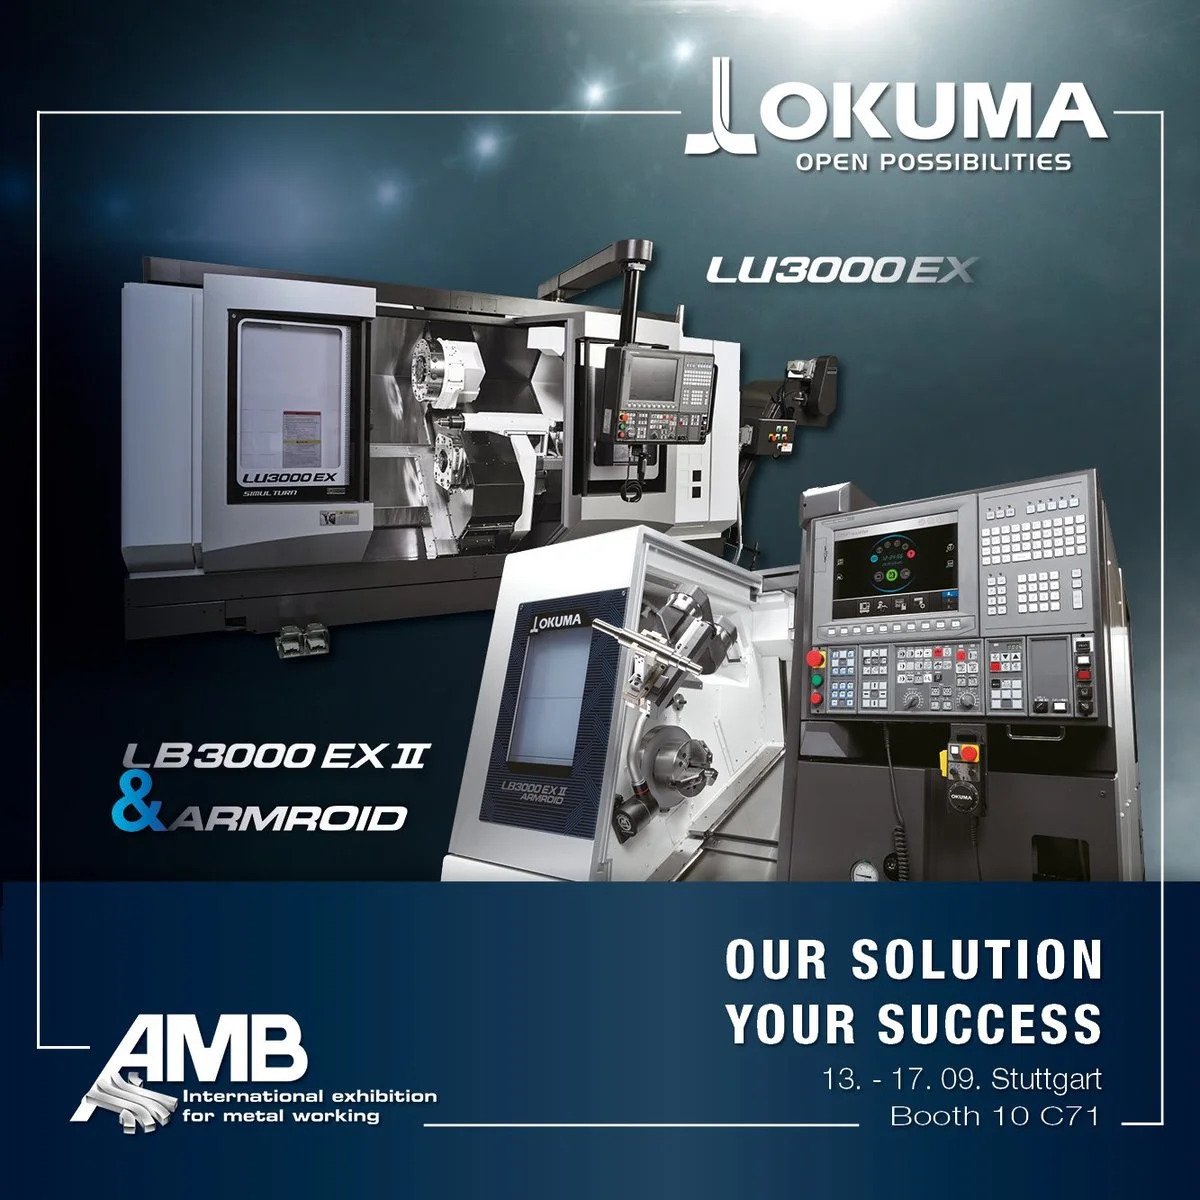 Okuma set out plans for AMB 2022